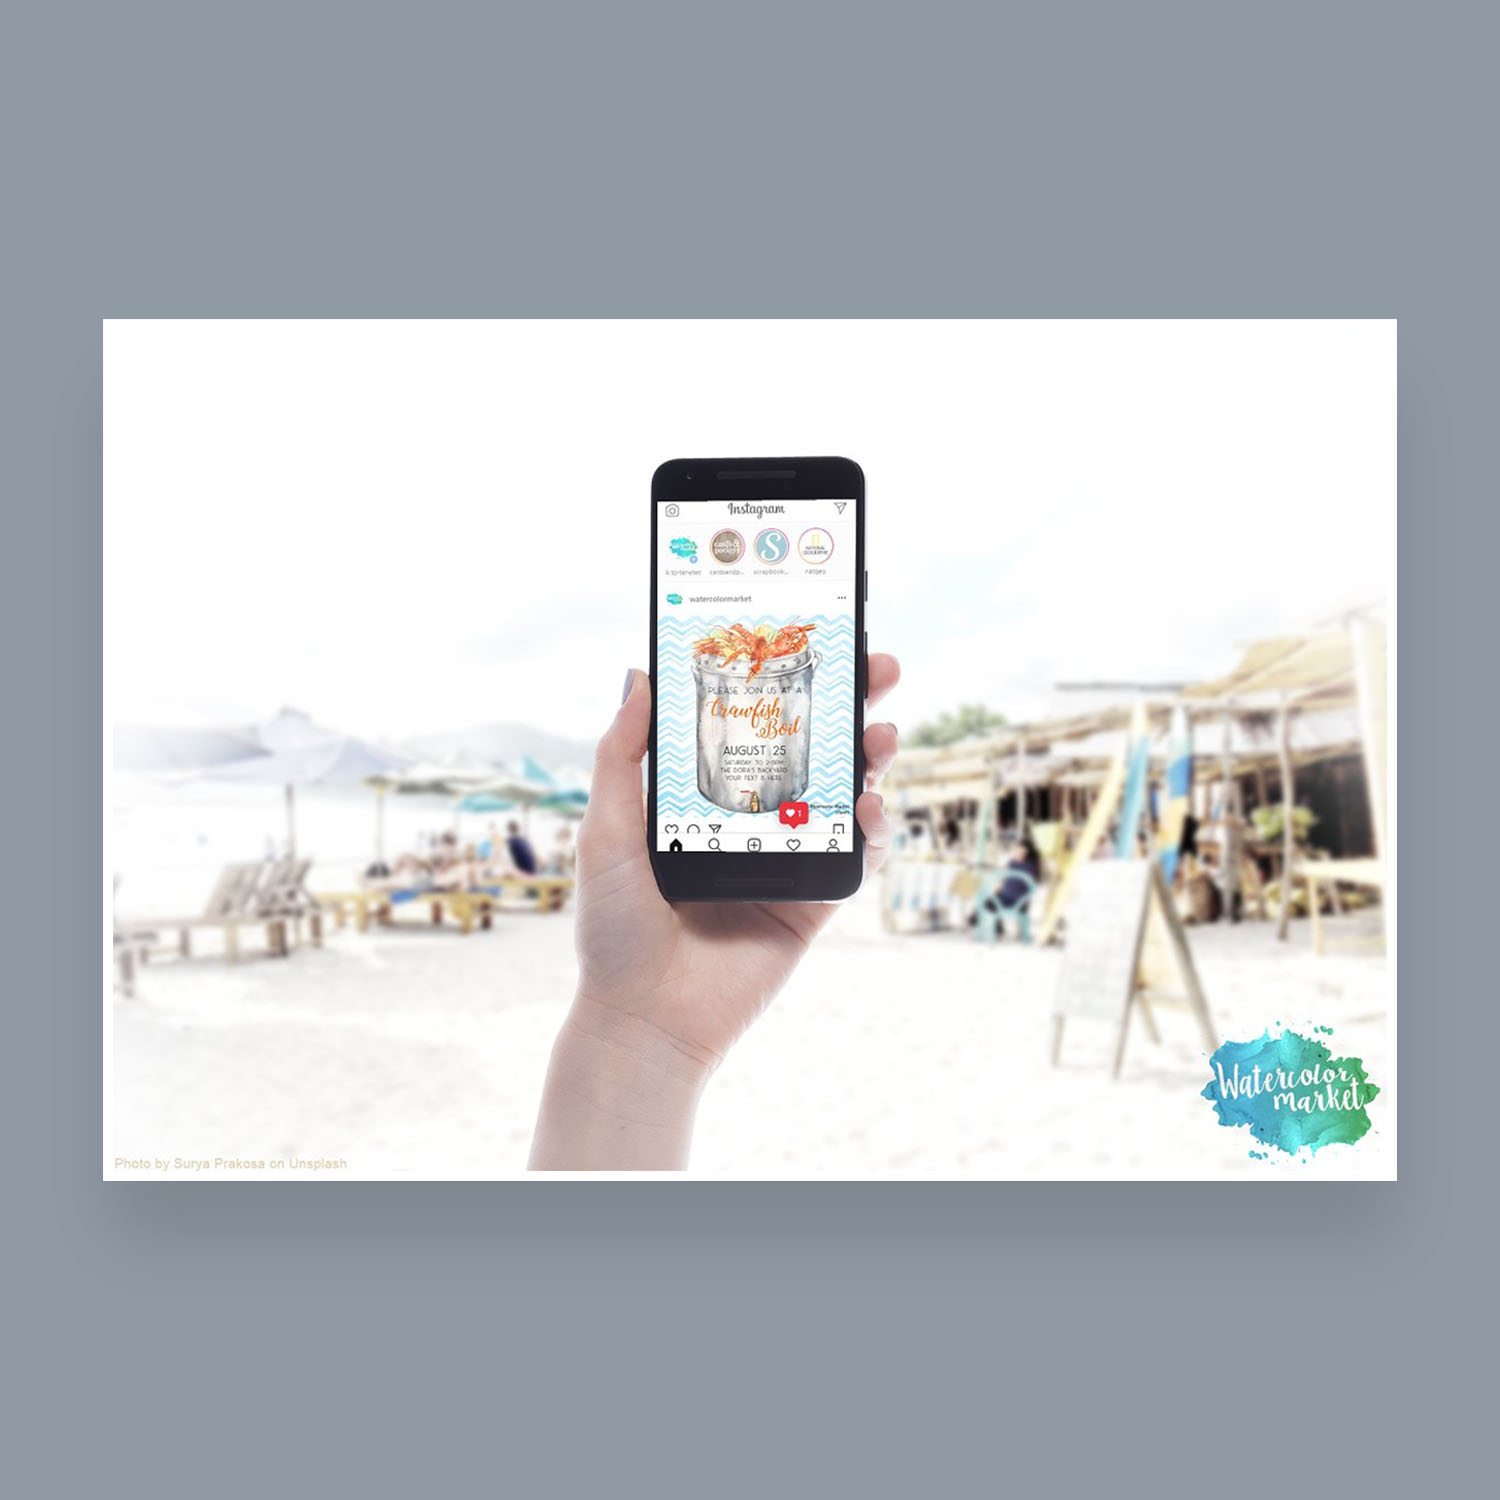 Watercolor srawfish on smartphone.